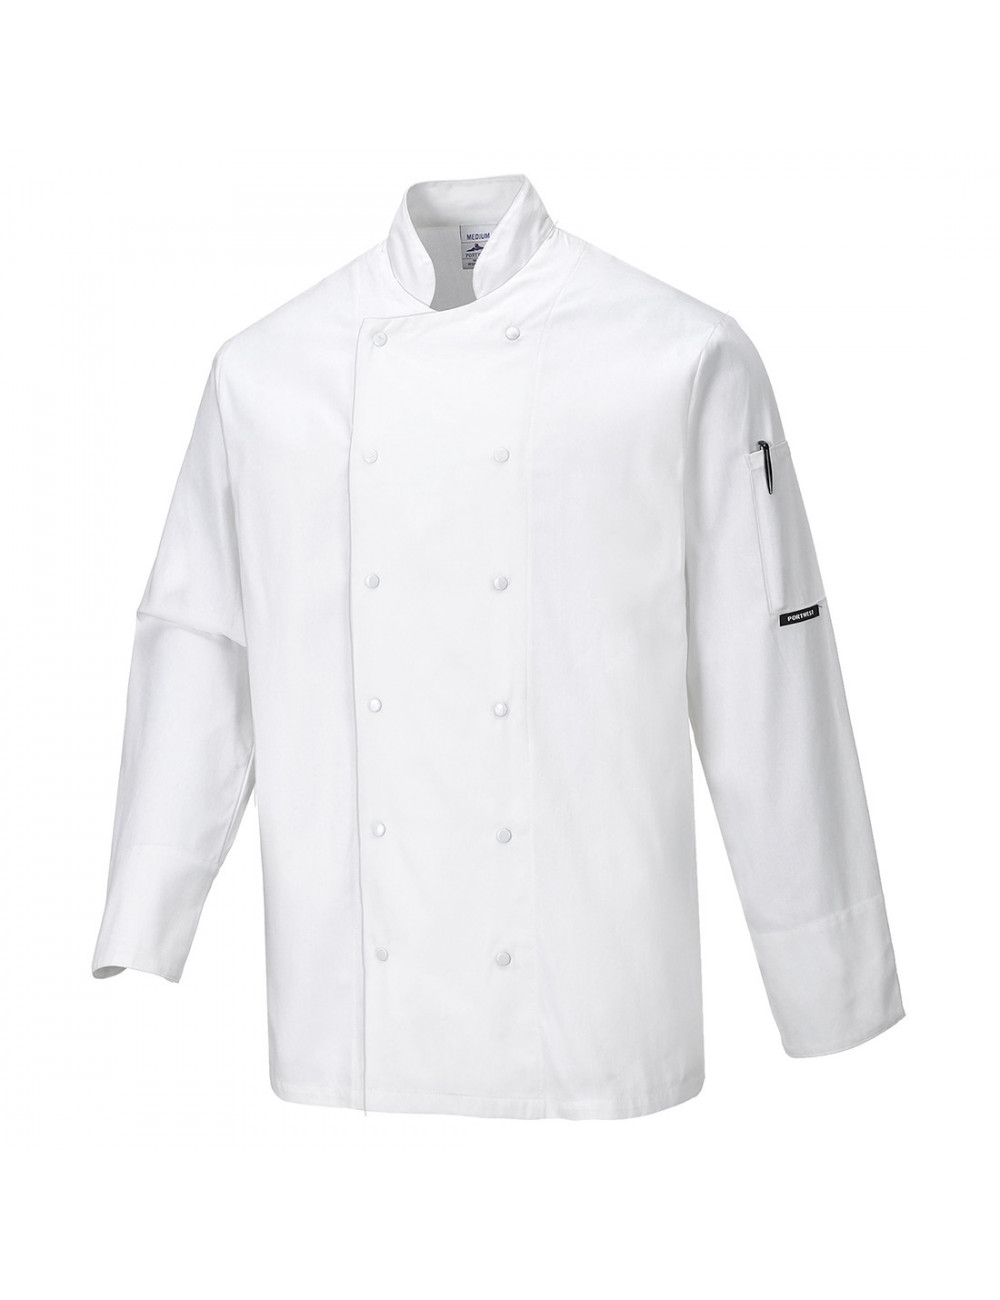 Chef sweatshirt dundee white Portwest